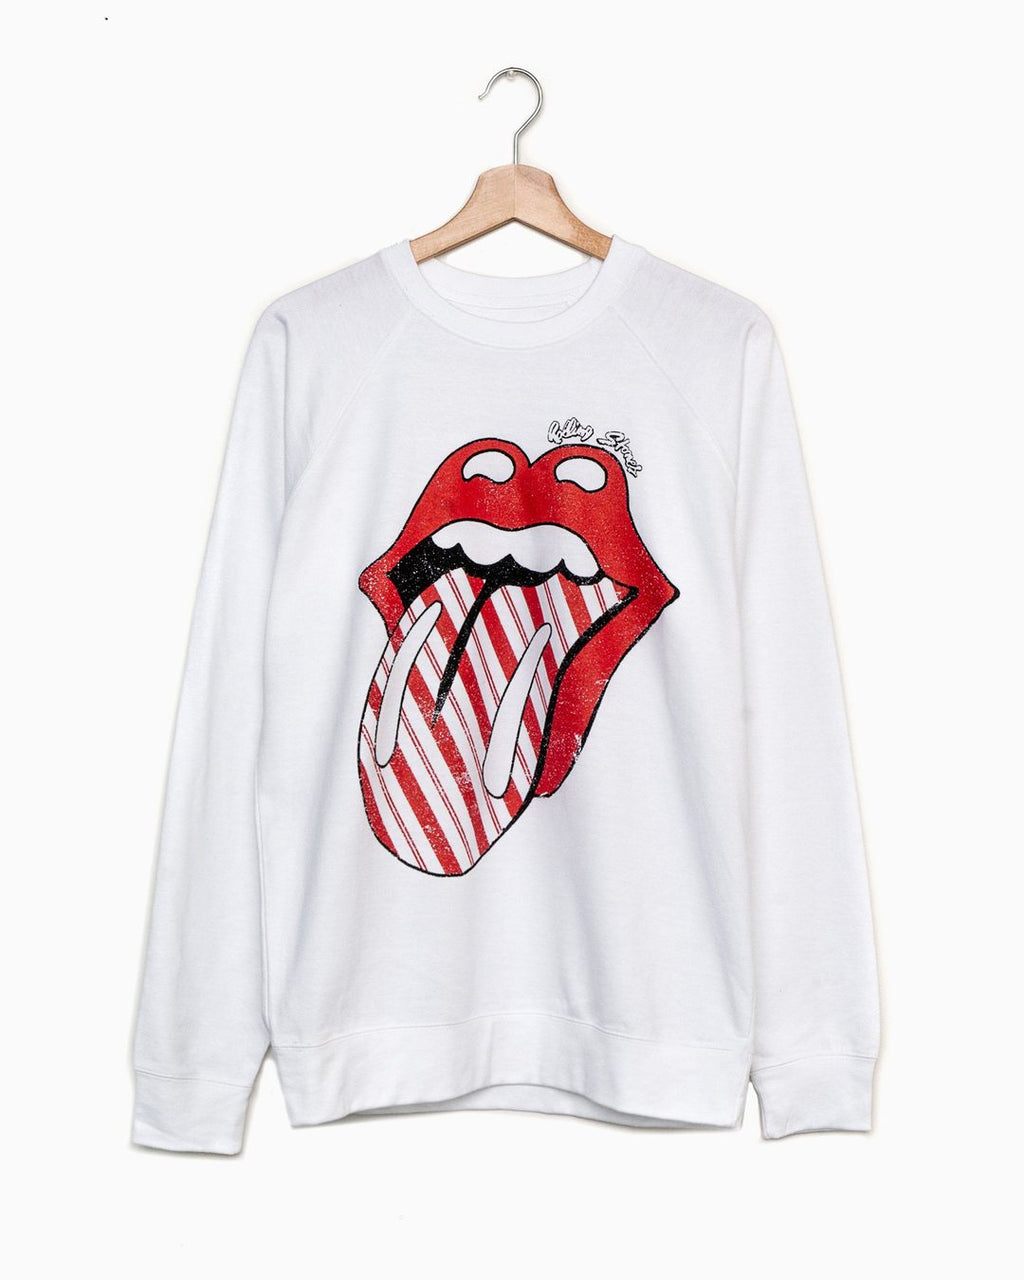 LivyLu Rolling Stones Candy Cane Lick Graphic Sweatshirt